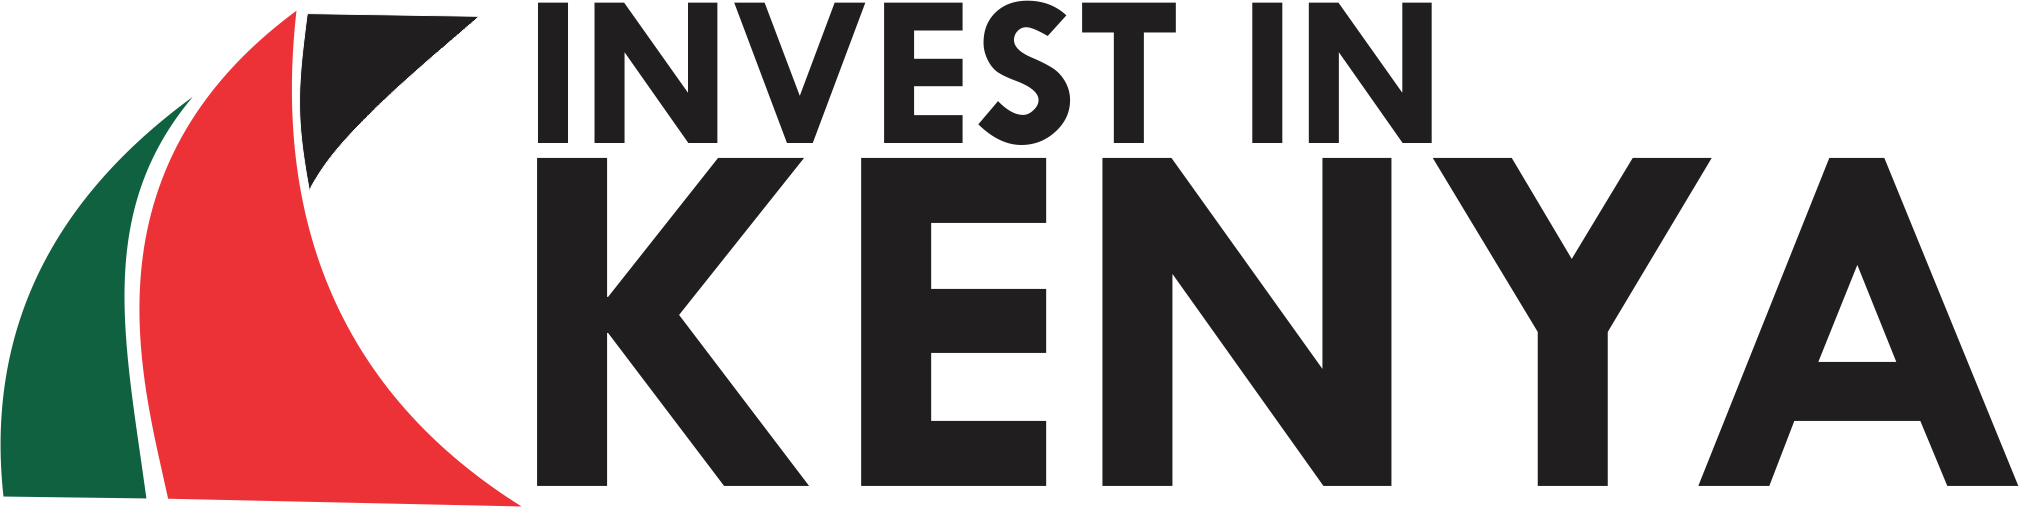 Invest In Kenya Expo